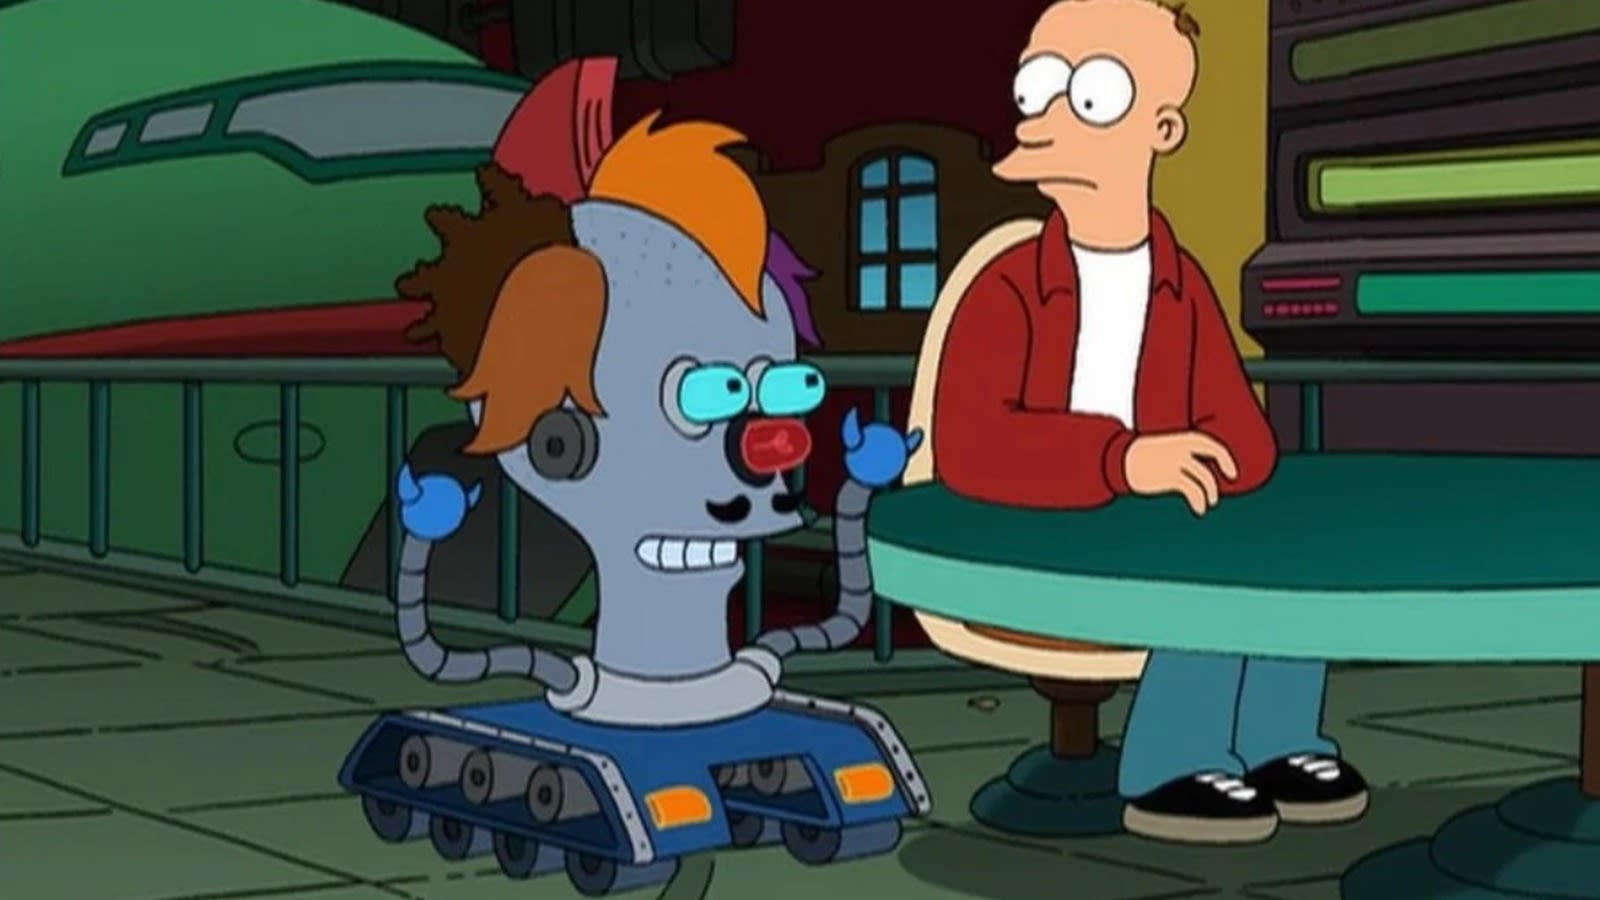 A Particularly Creepy Futurama Robot Sent Online Fans Into A Frenzy - SlashFilm